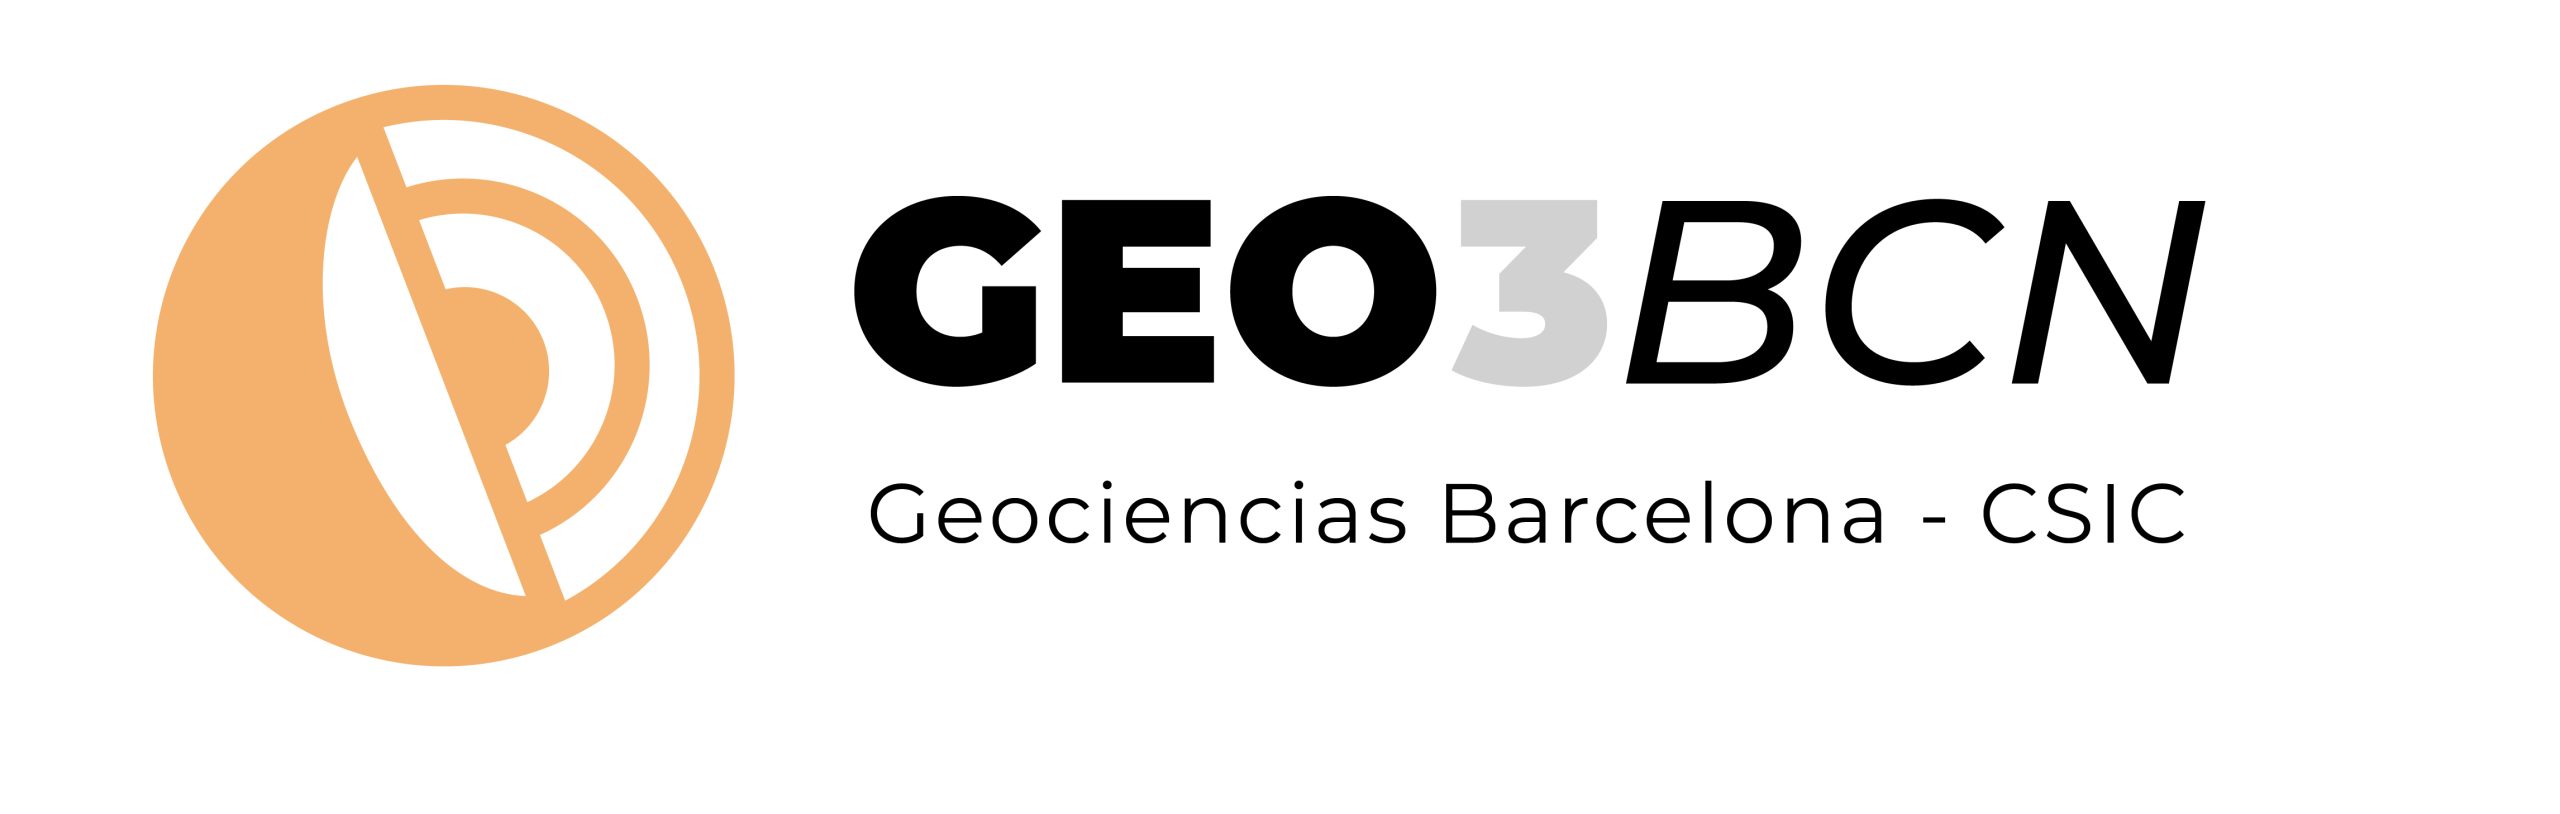 Logo_Geo3_BCN_Text_CAST-01